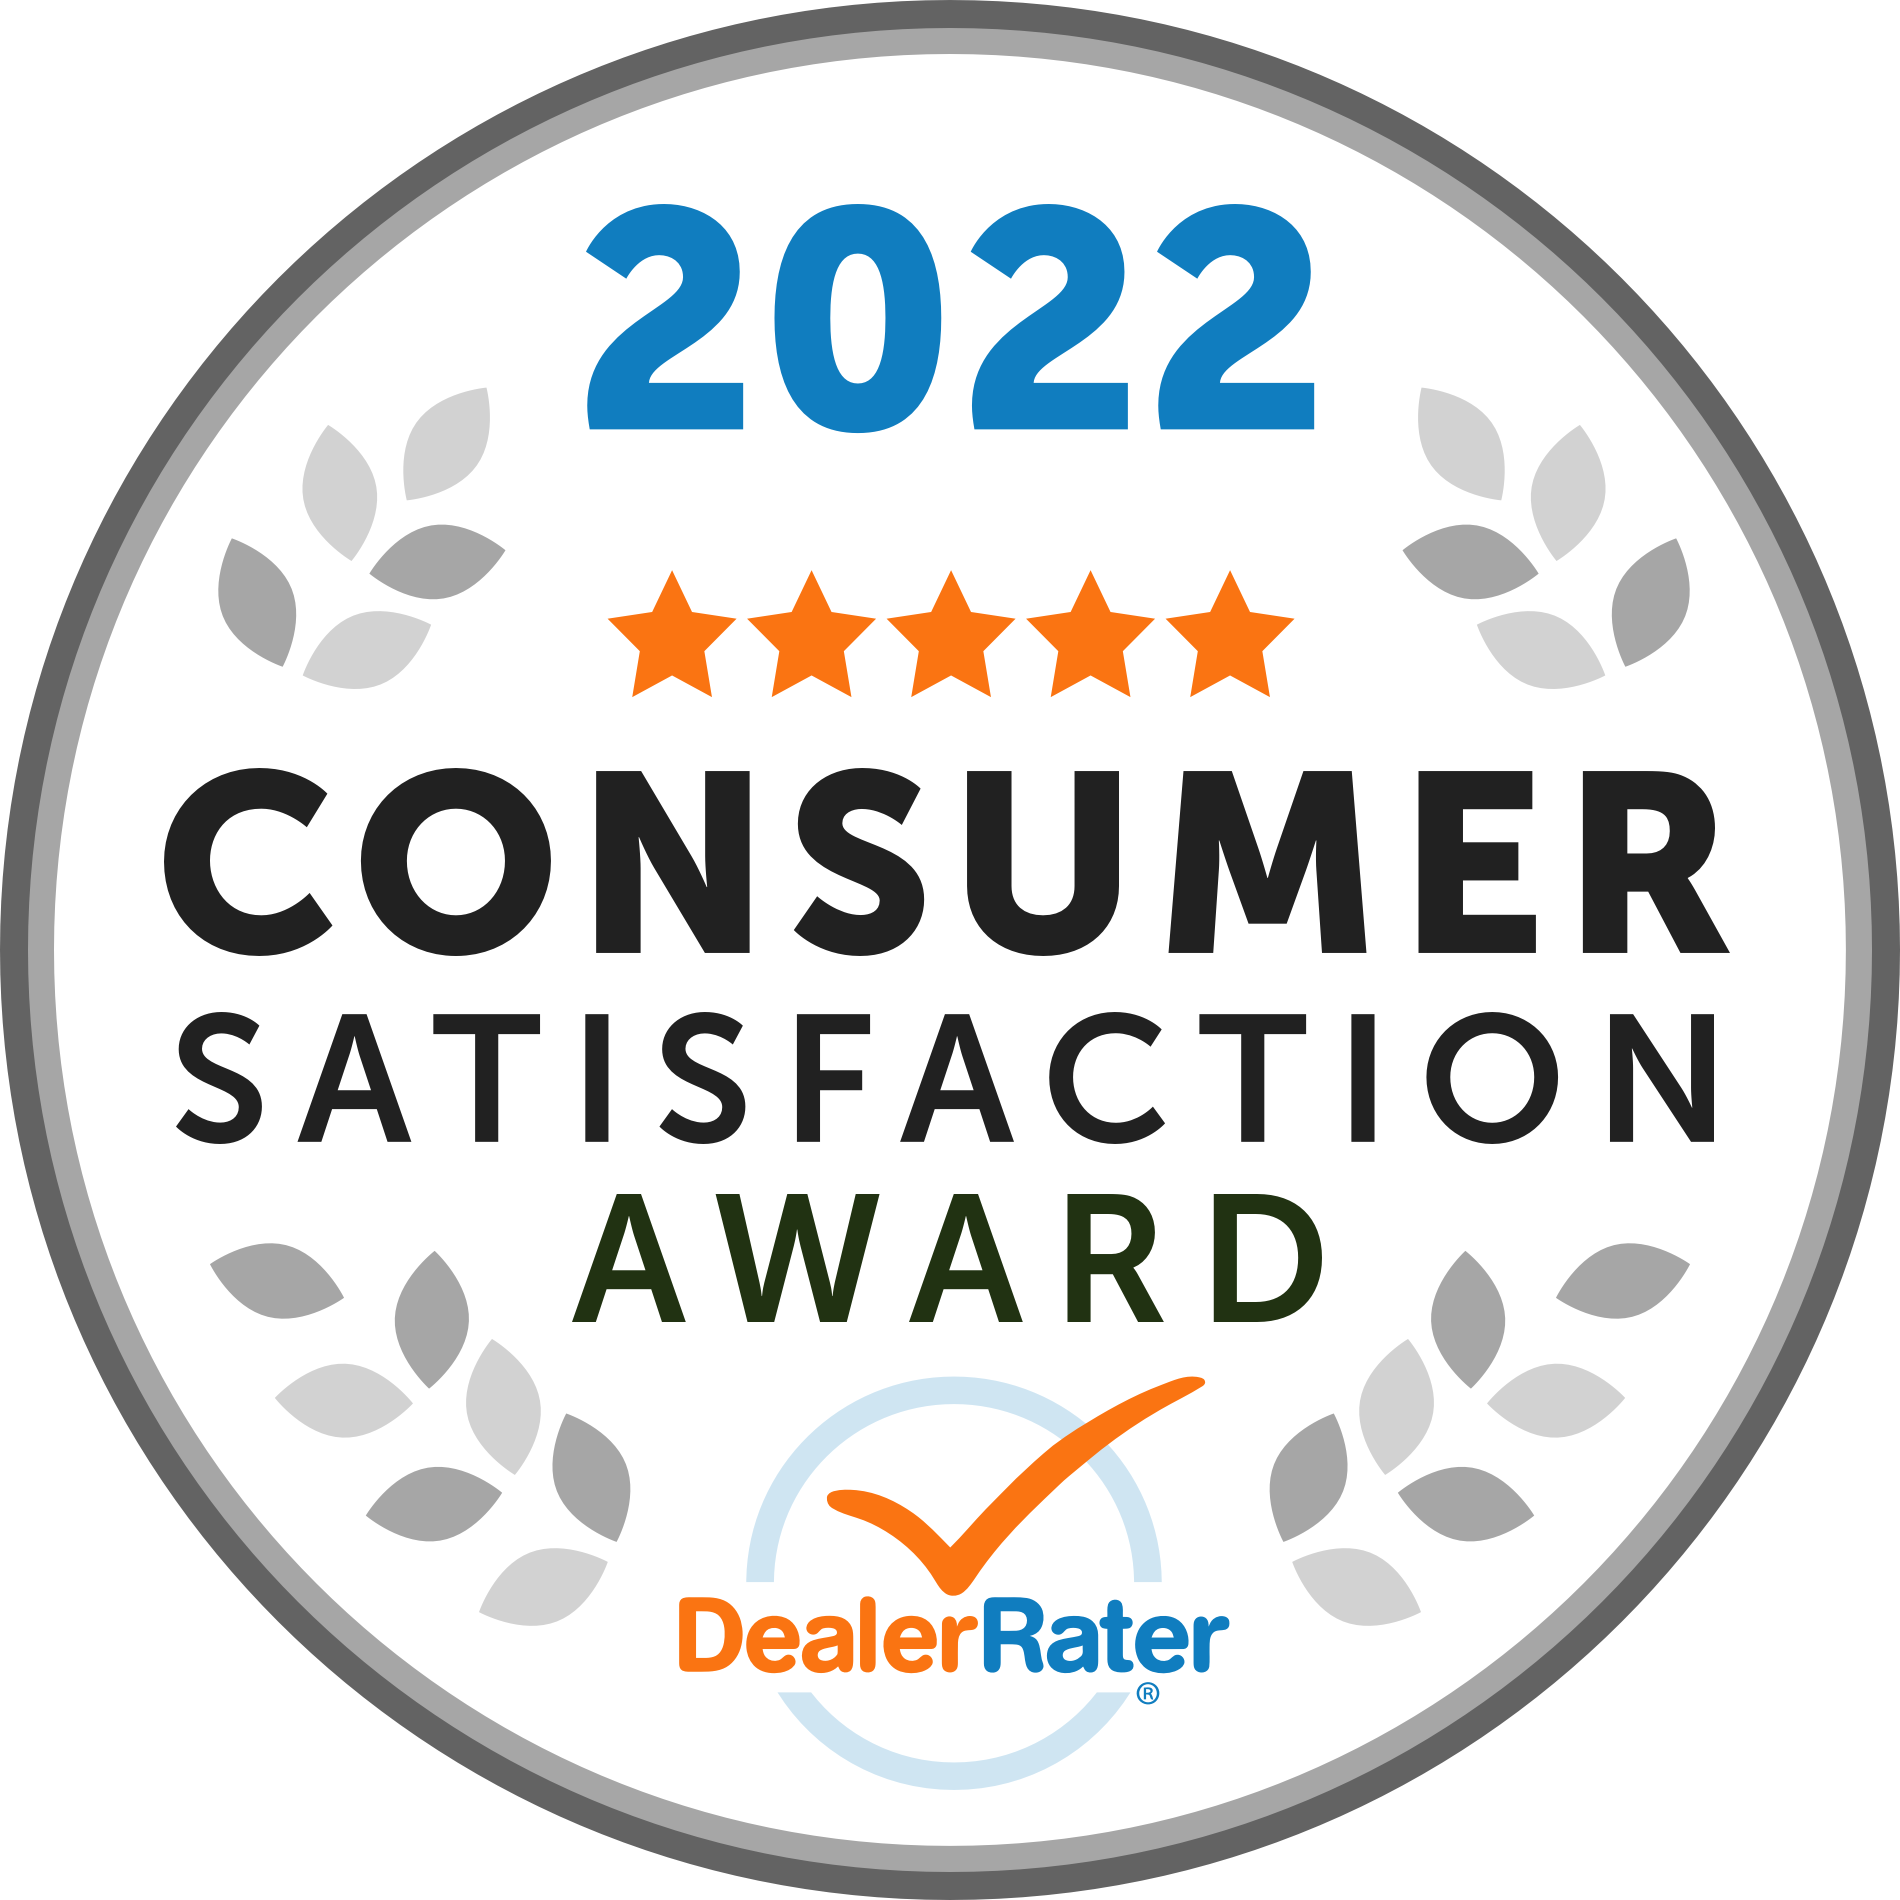 2022 Consumer Satisfaction Award from DealerRater